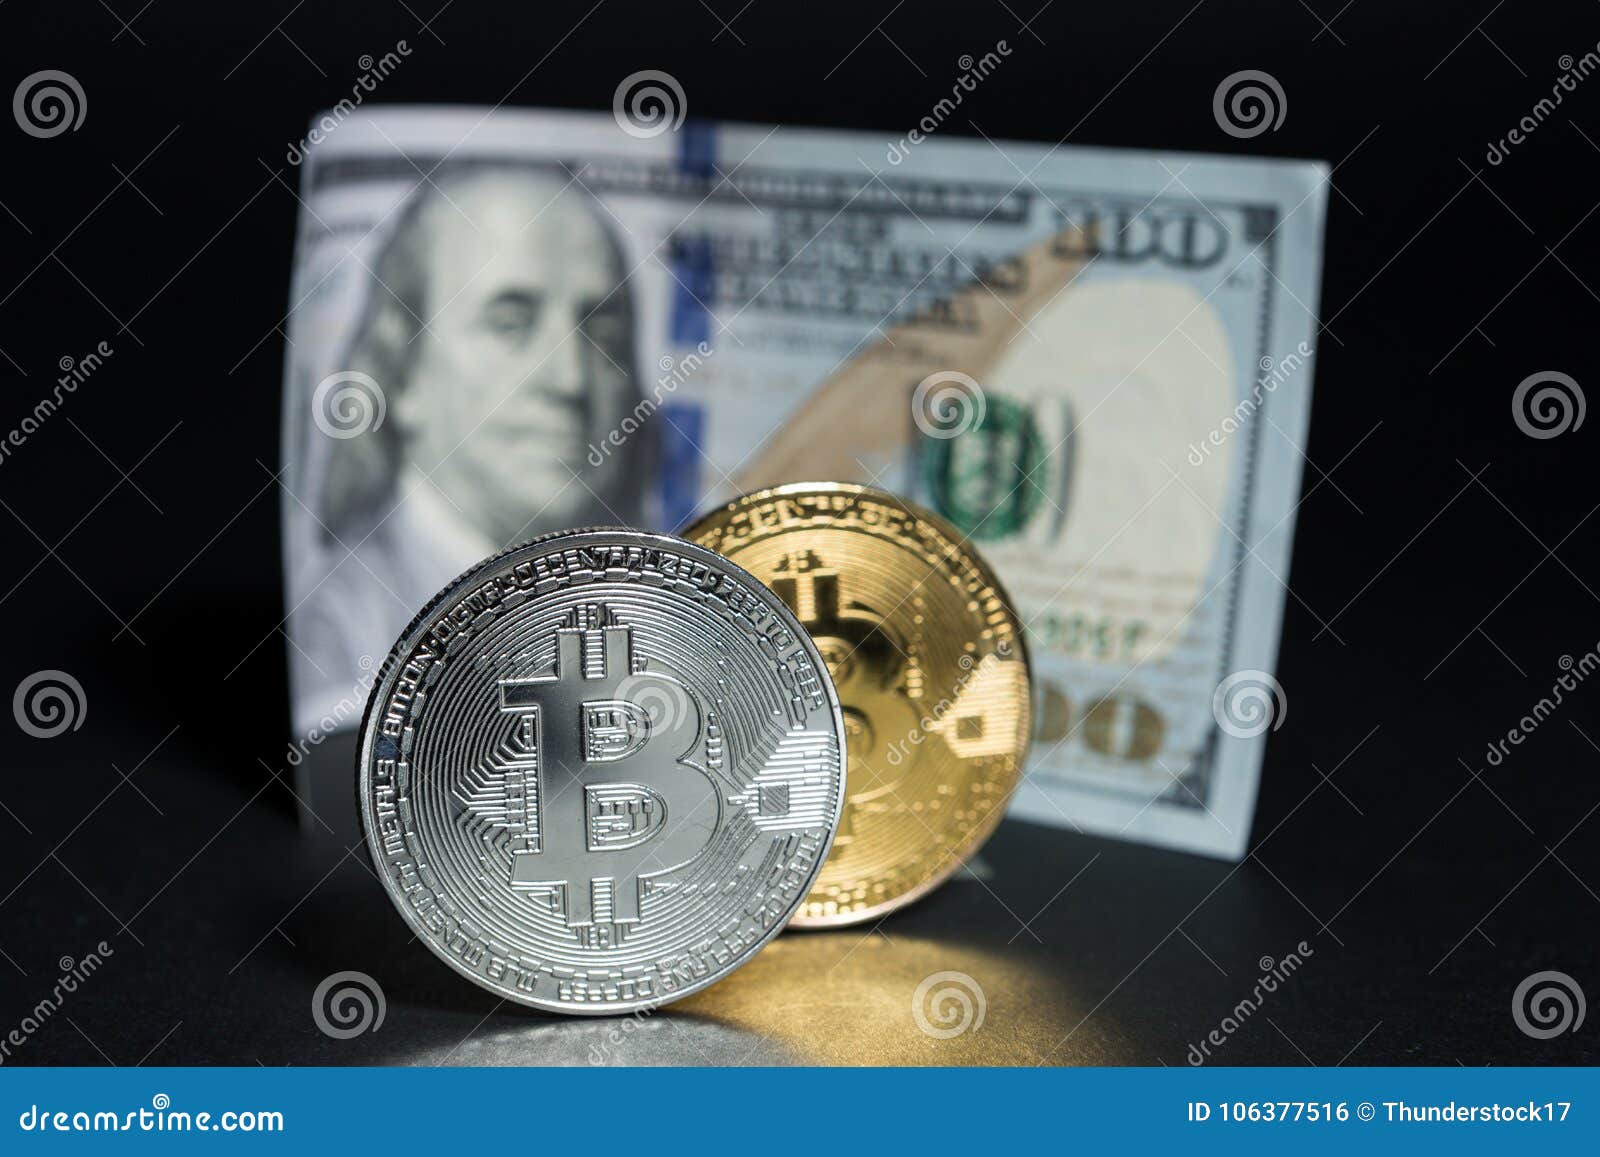 2500 bitcoins in dollars